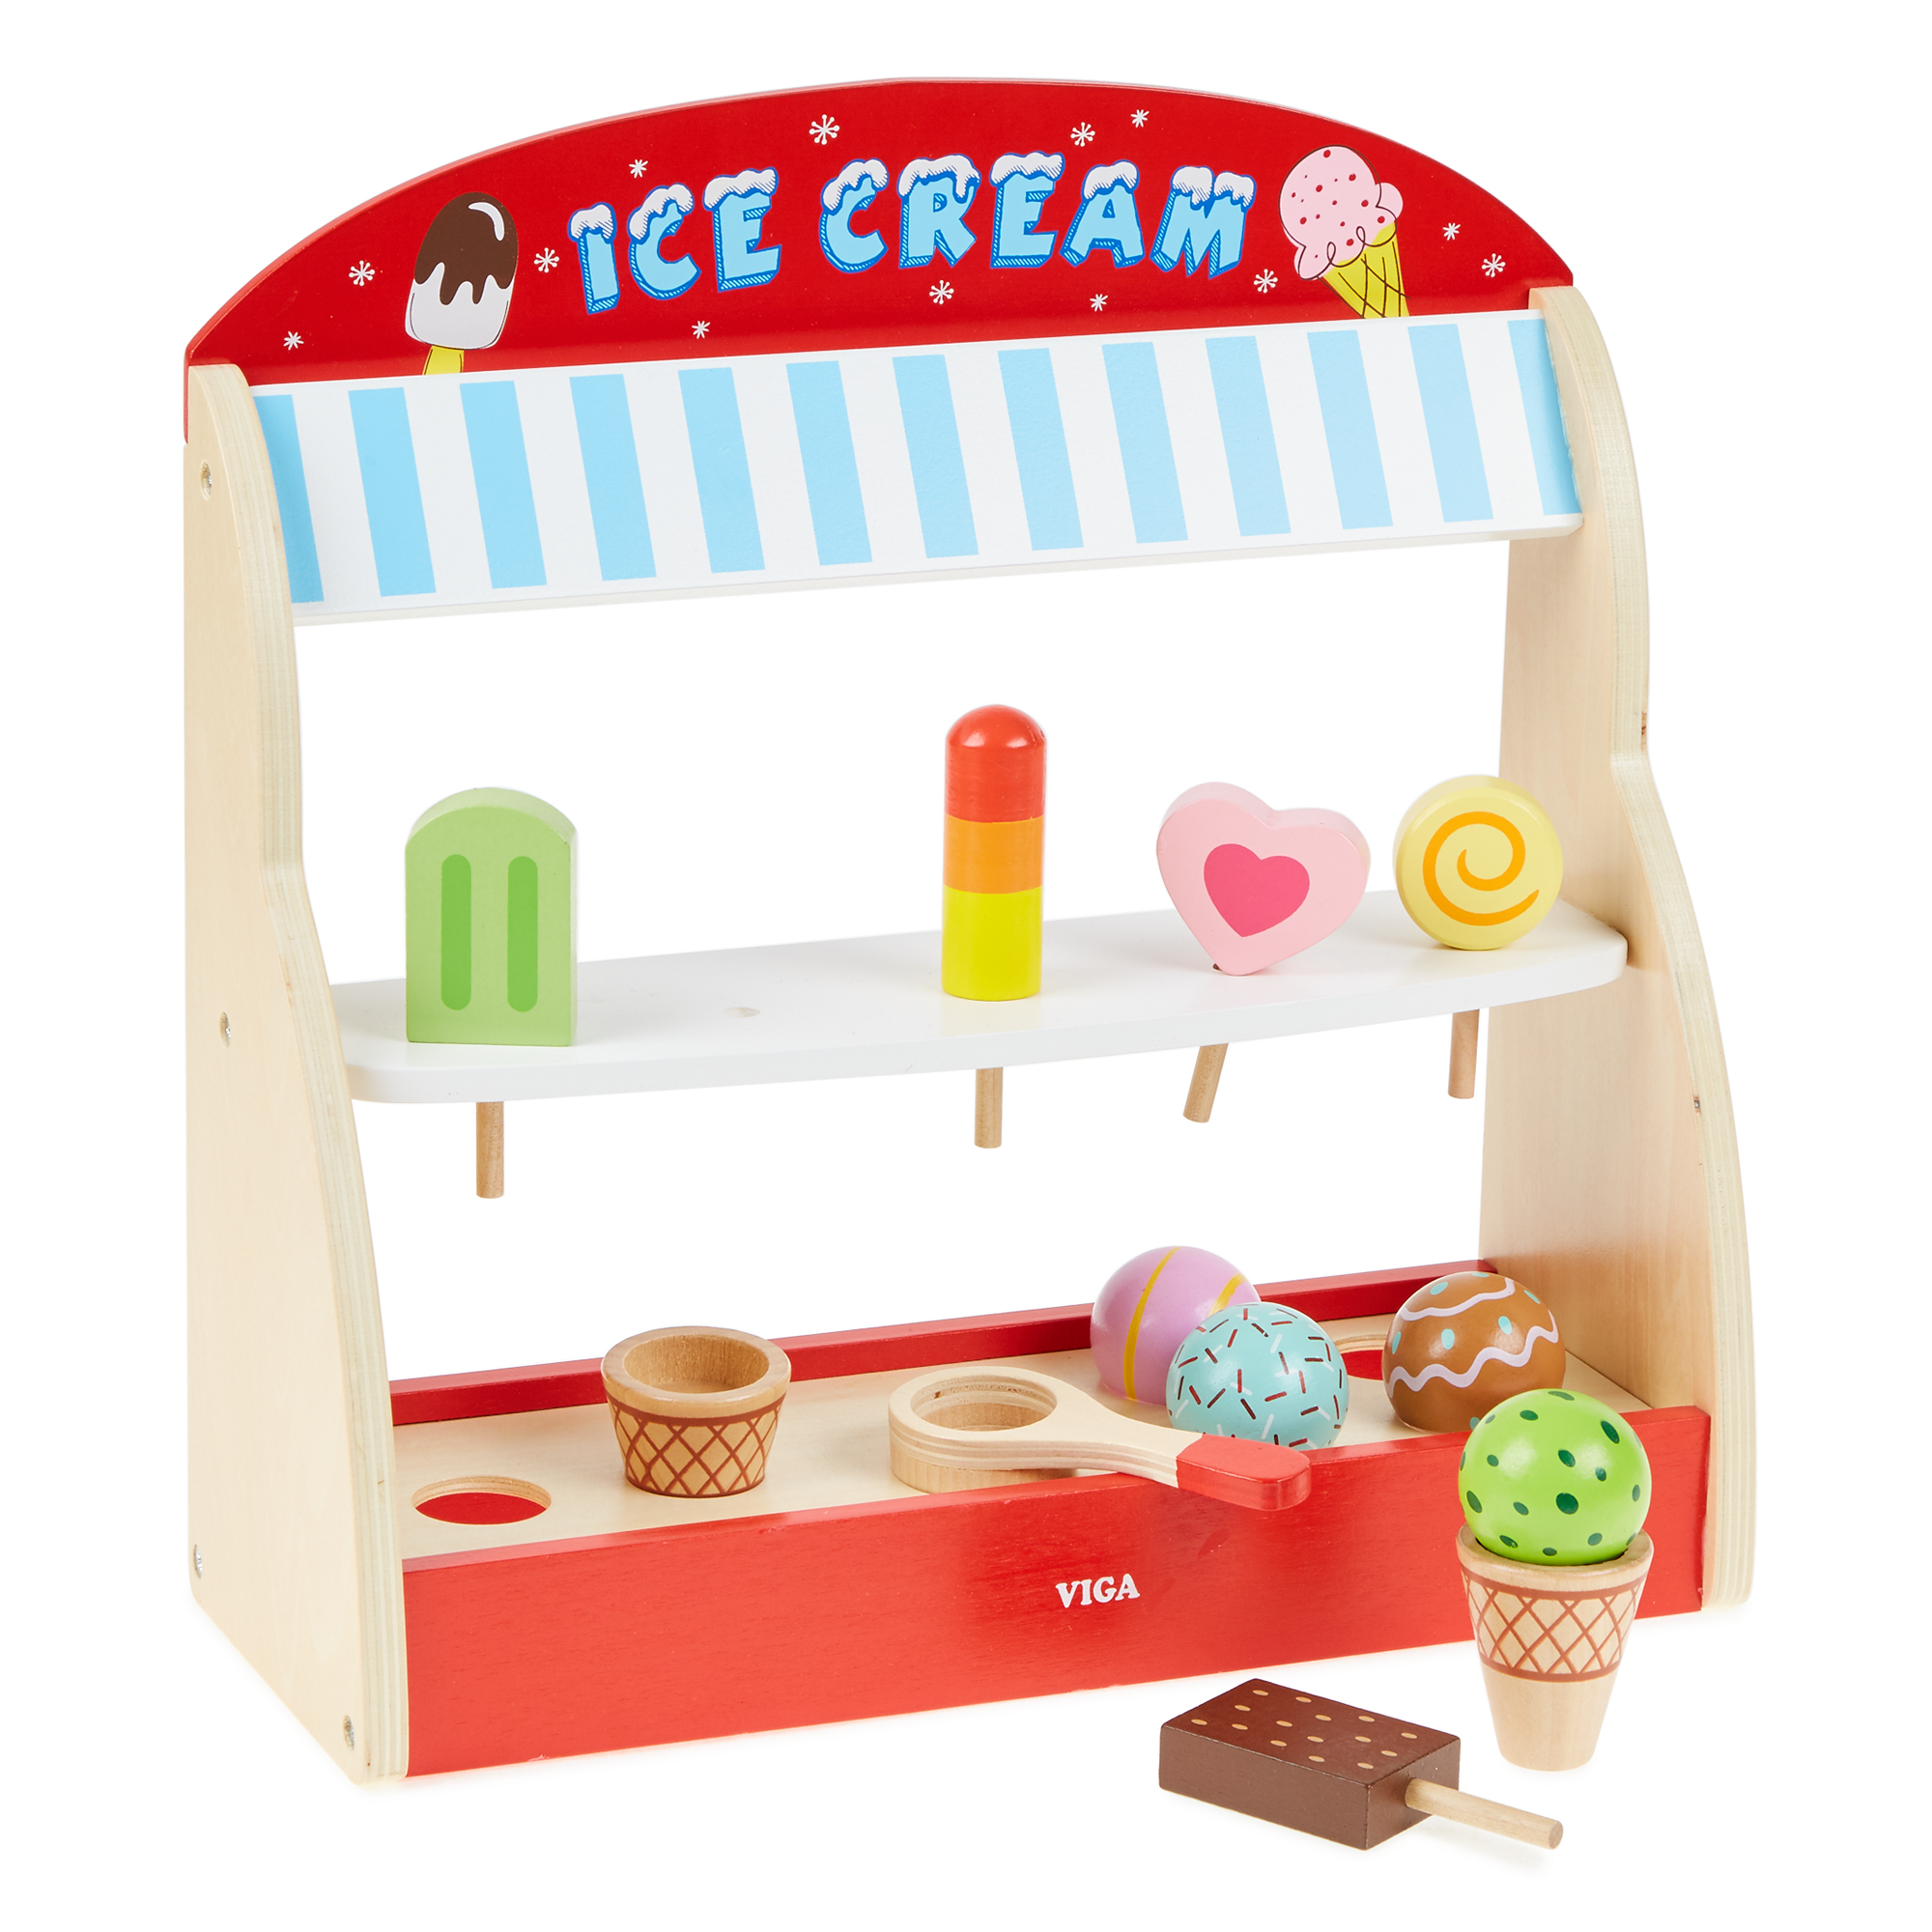 ice cream parlour toy